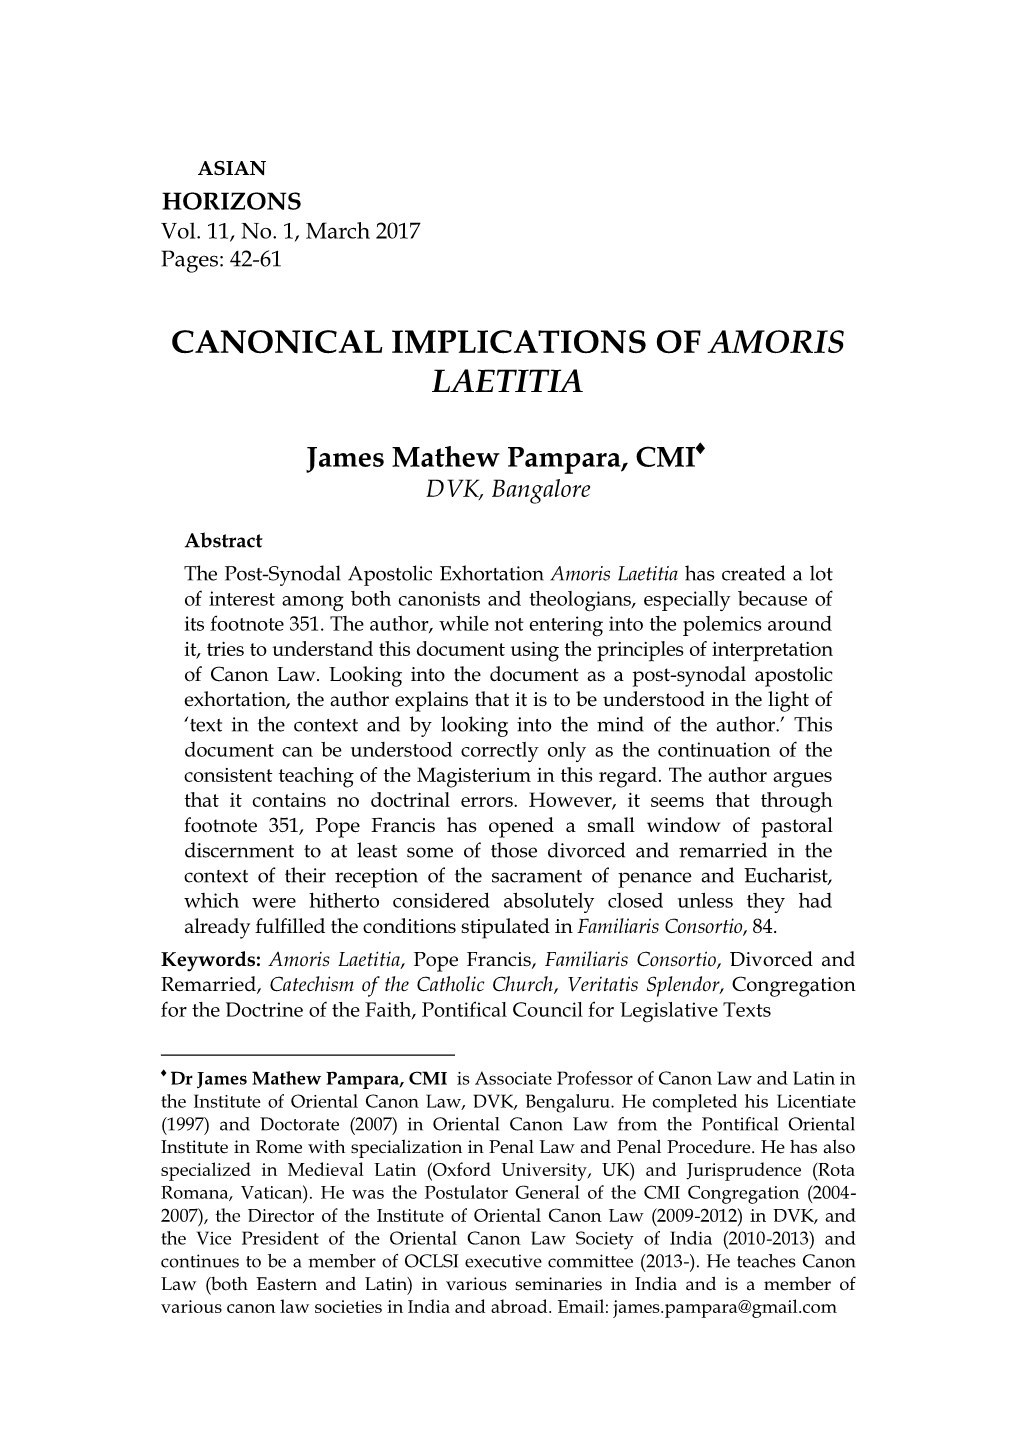 Canonical Implications of Amoris Laetitia